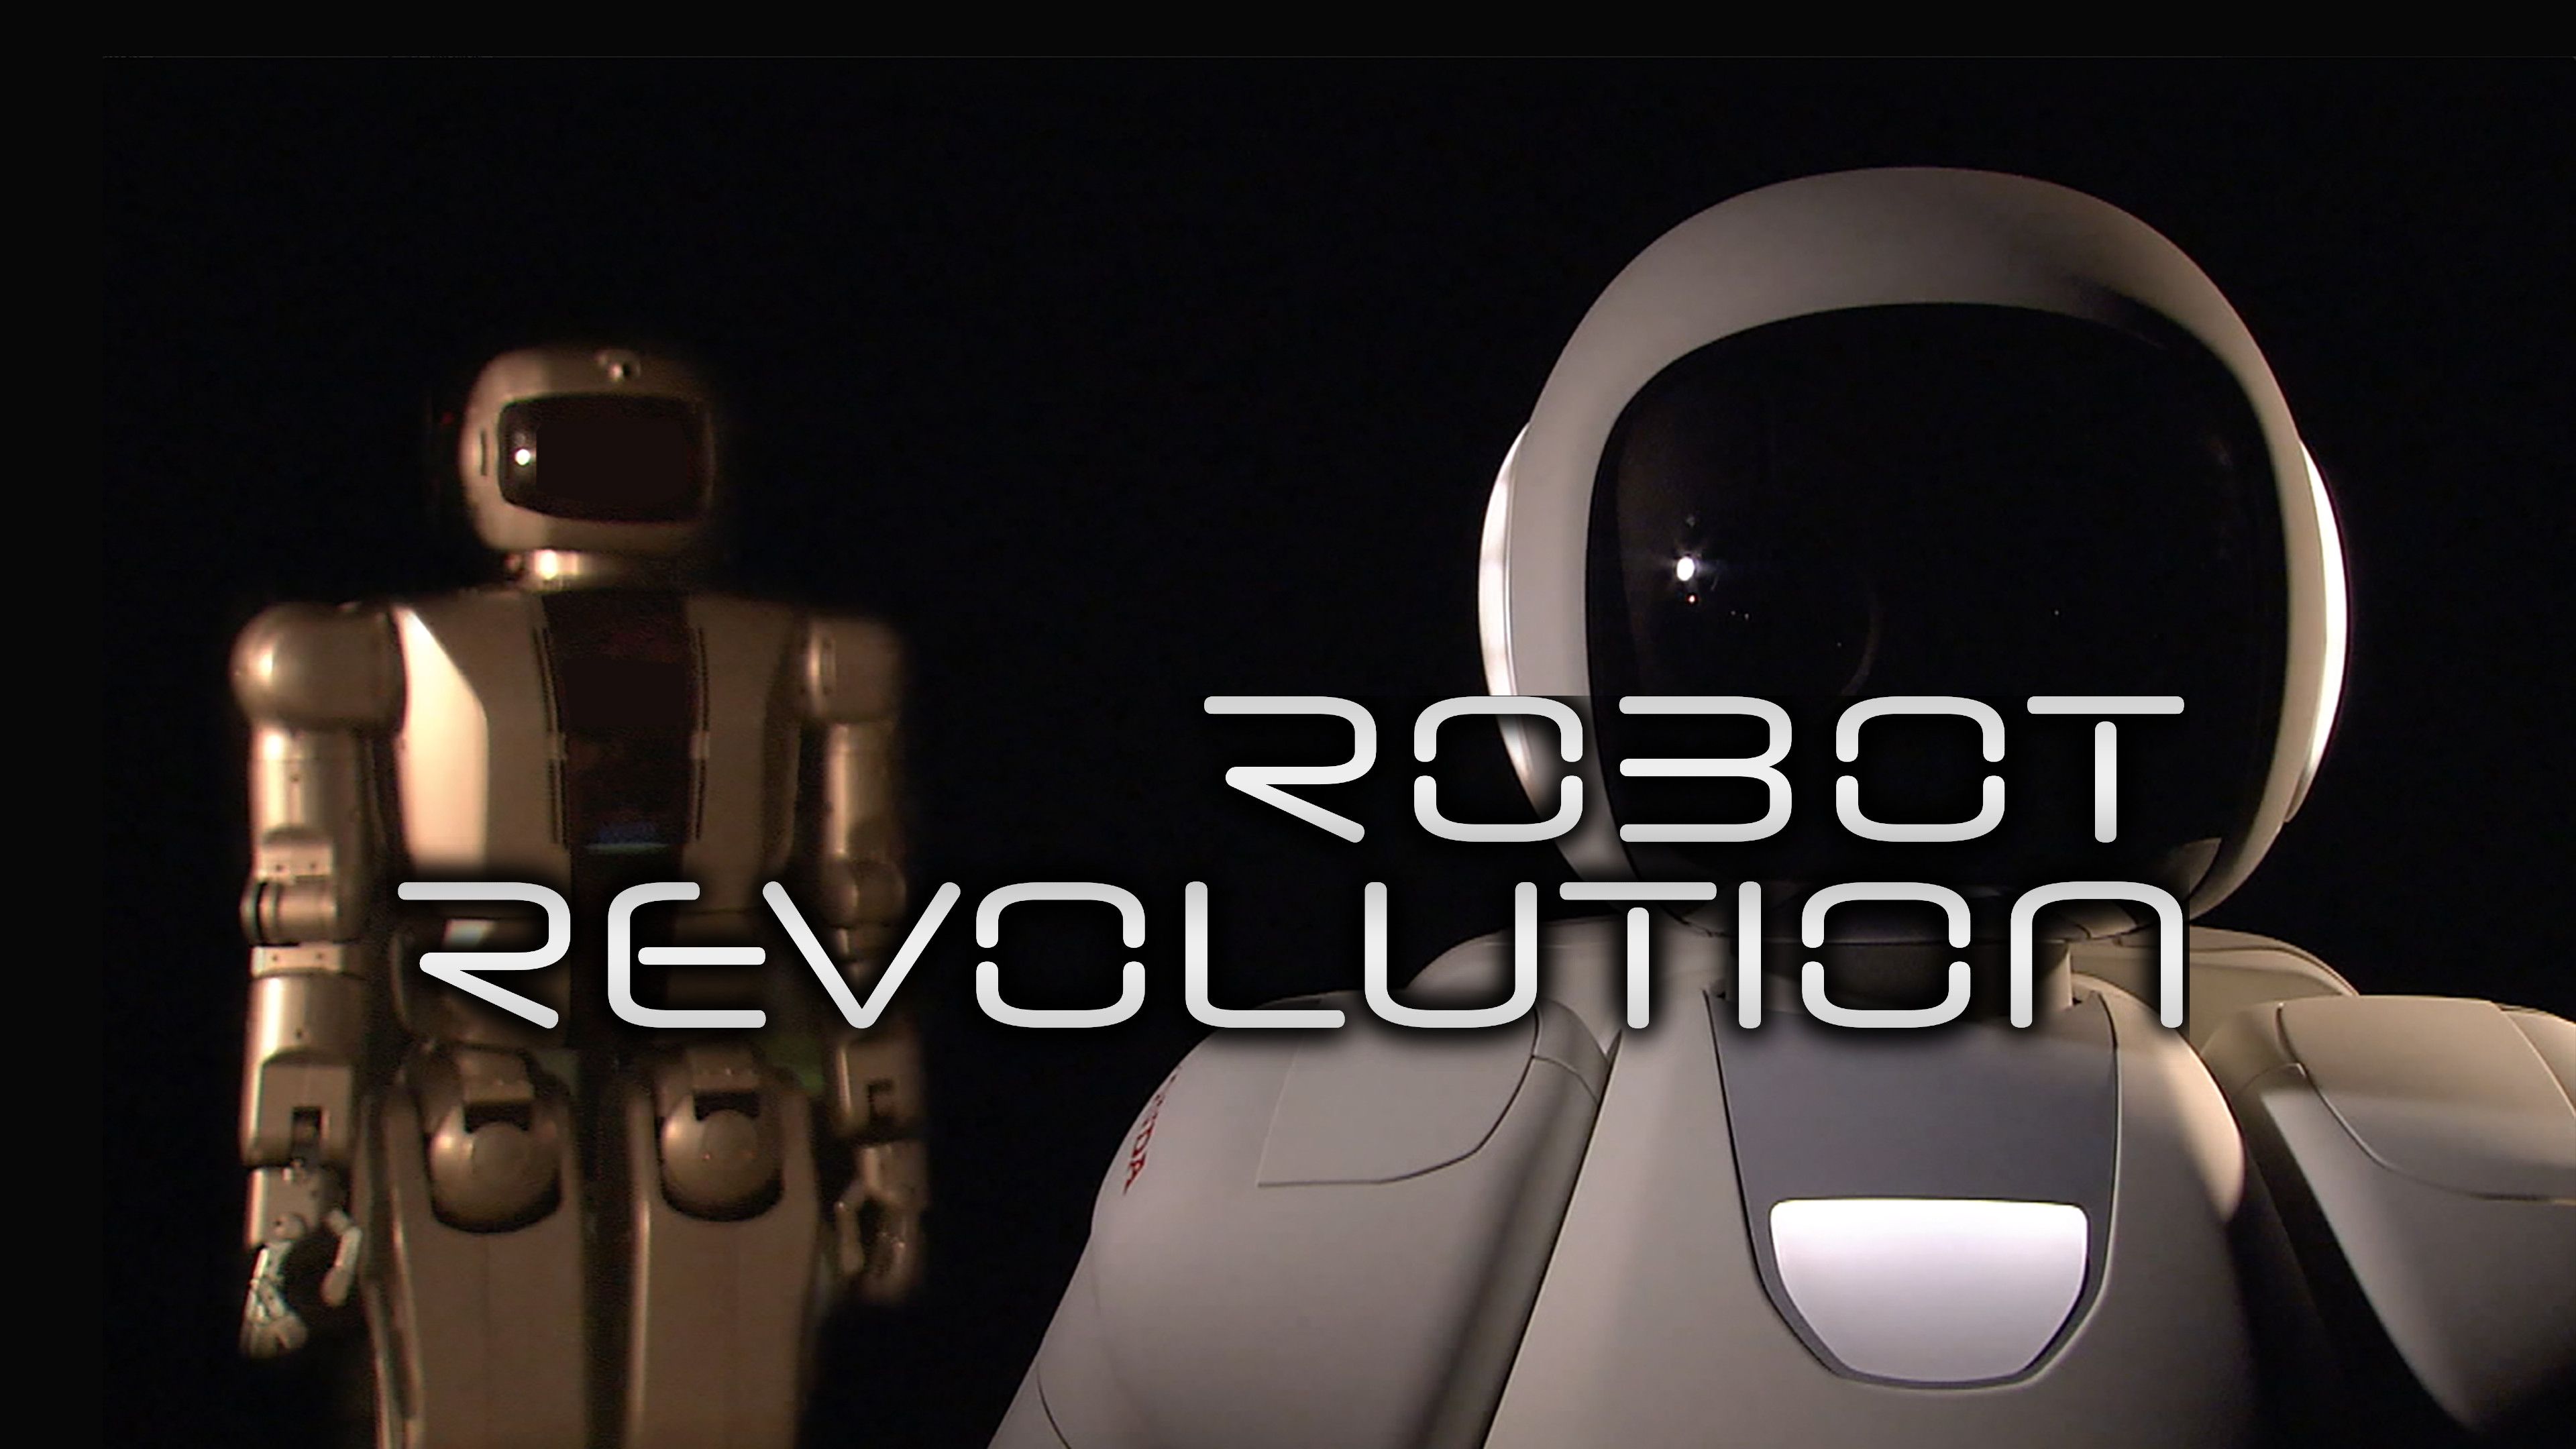 Robot Revolution: Will Machines Surpass Humans?